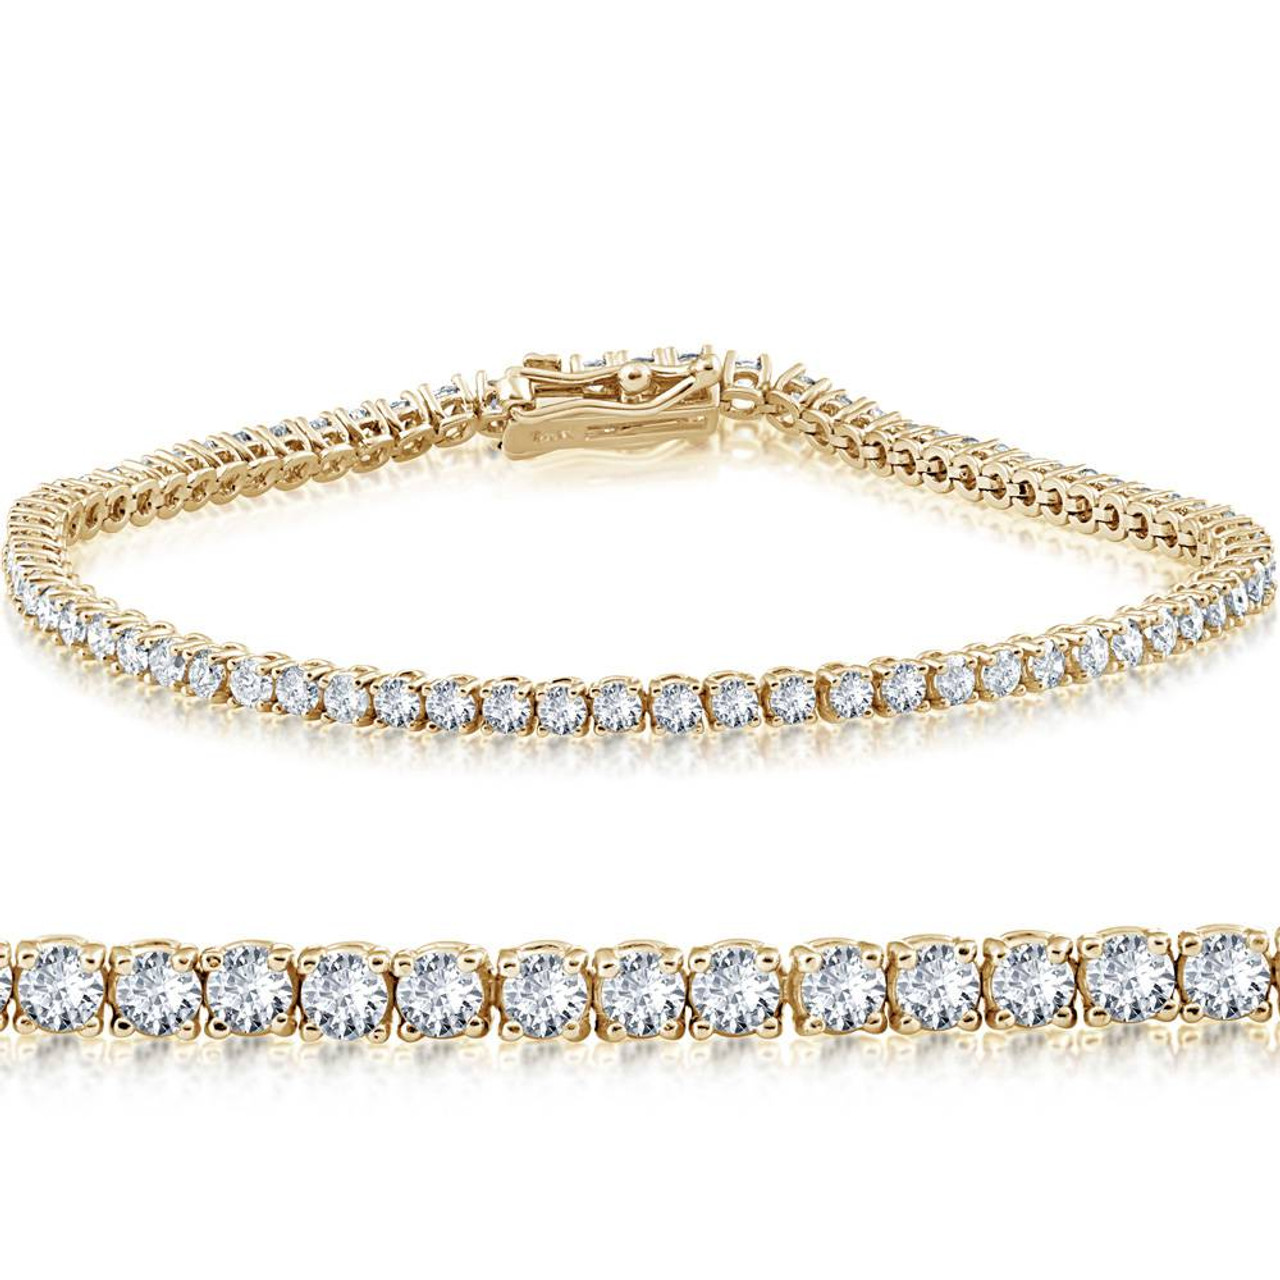 2 Carat Diamond Tennis Bracelet in 14k White Gold